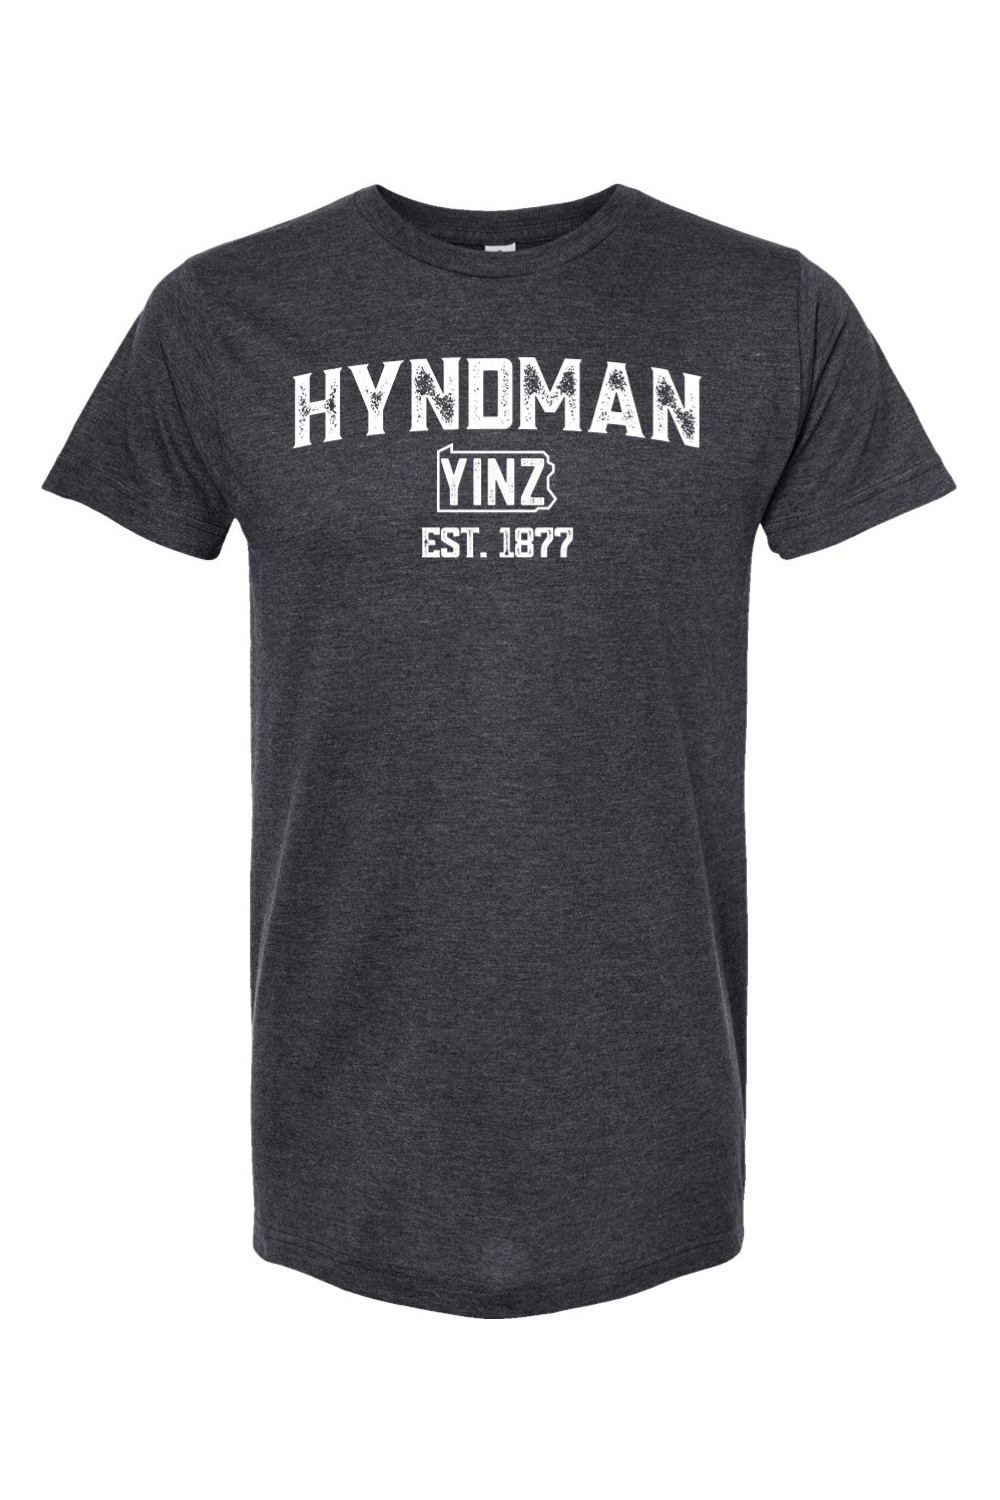 Hyndman Yinzylvania - Yinzylvania